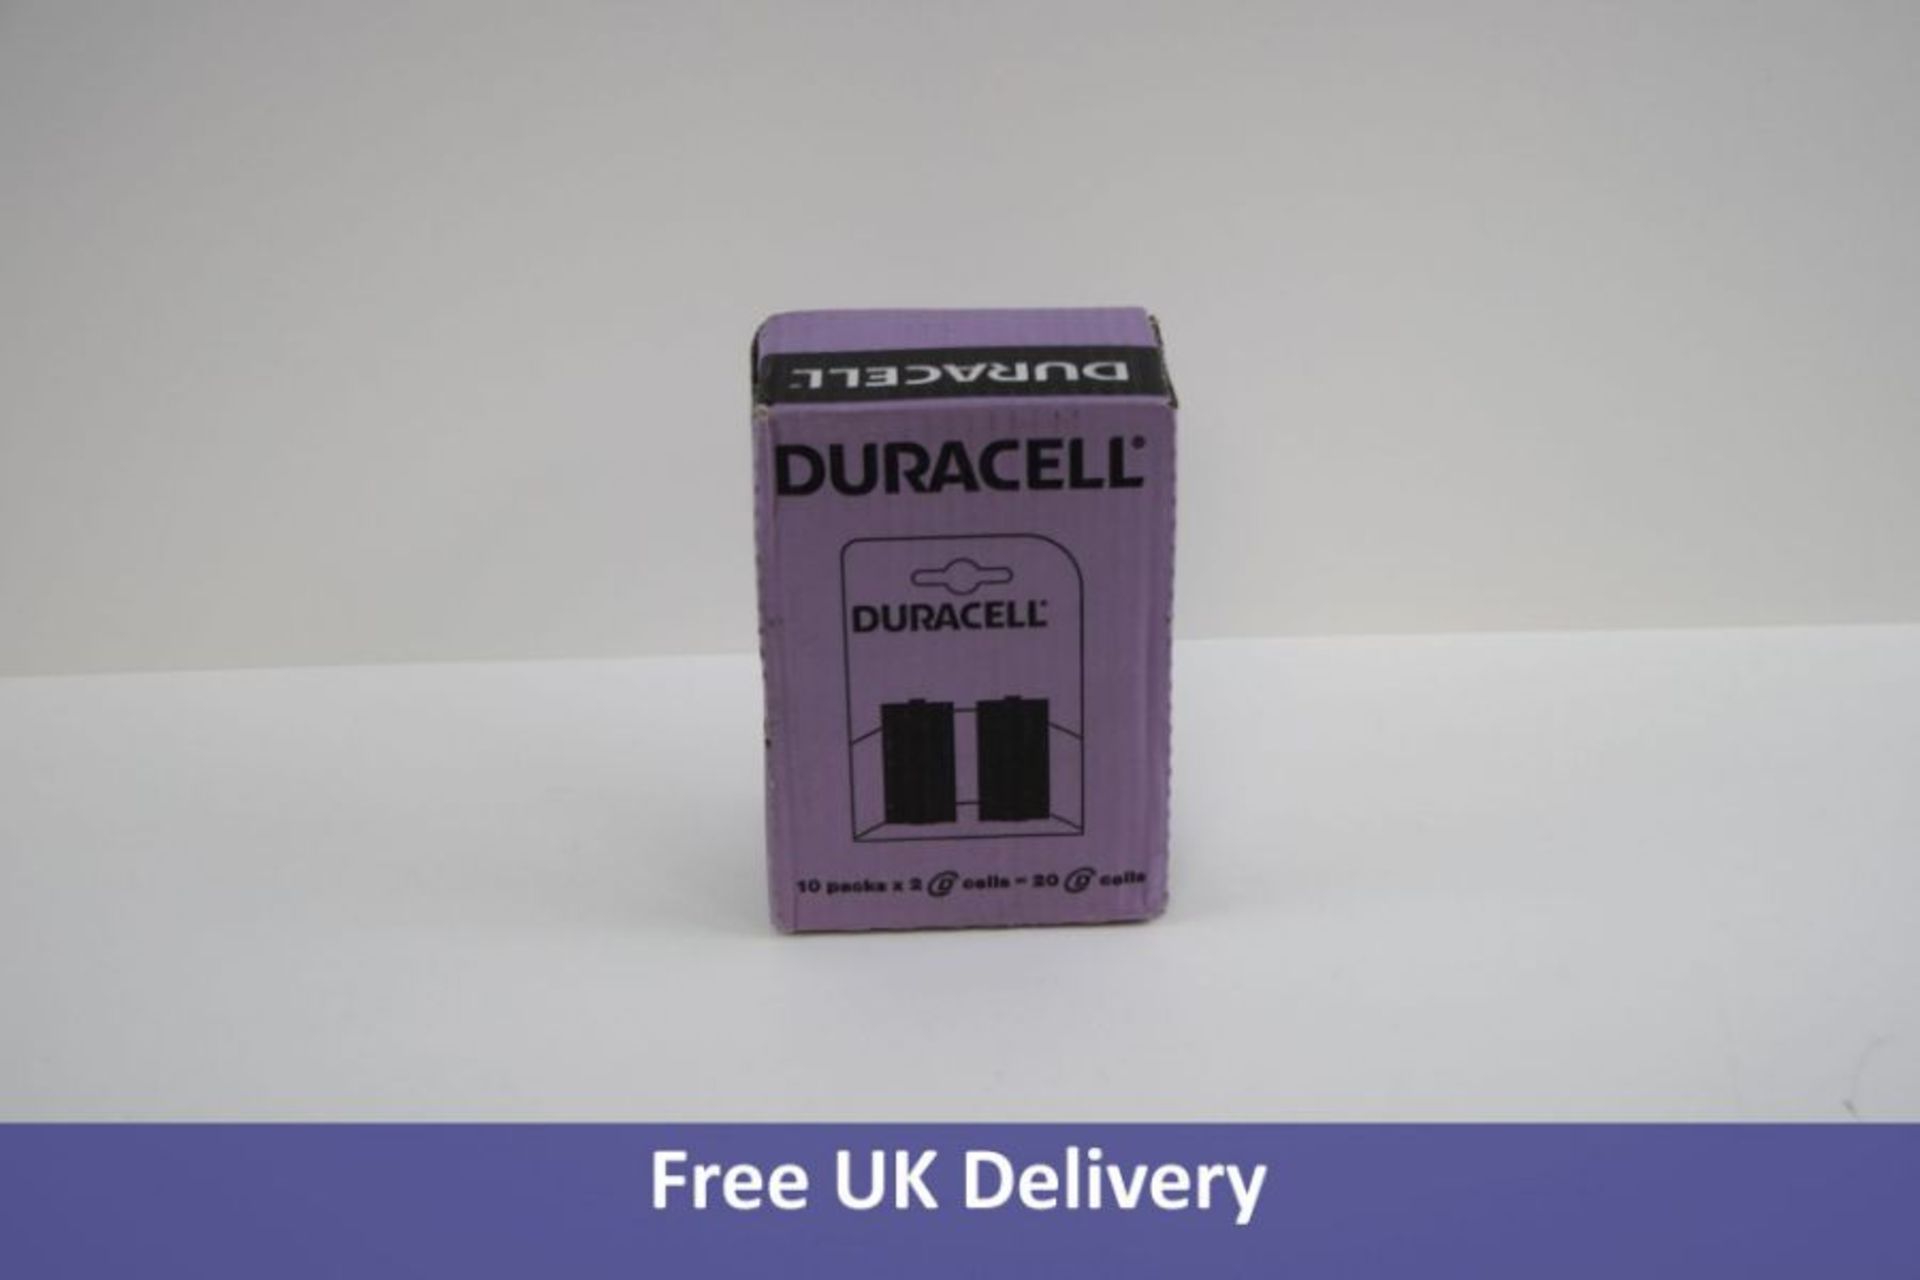 Ten Packs of 2 Duracell LR20 Batteries